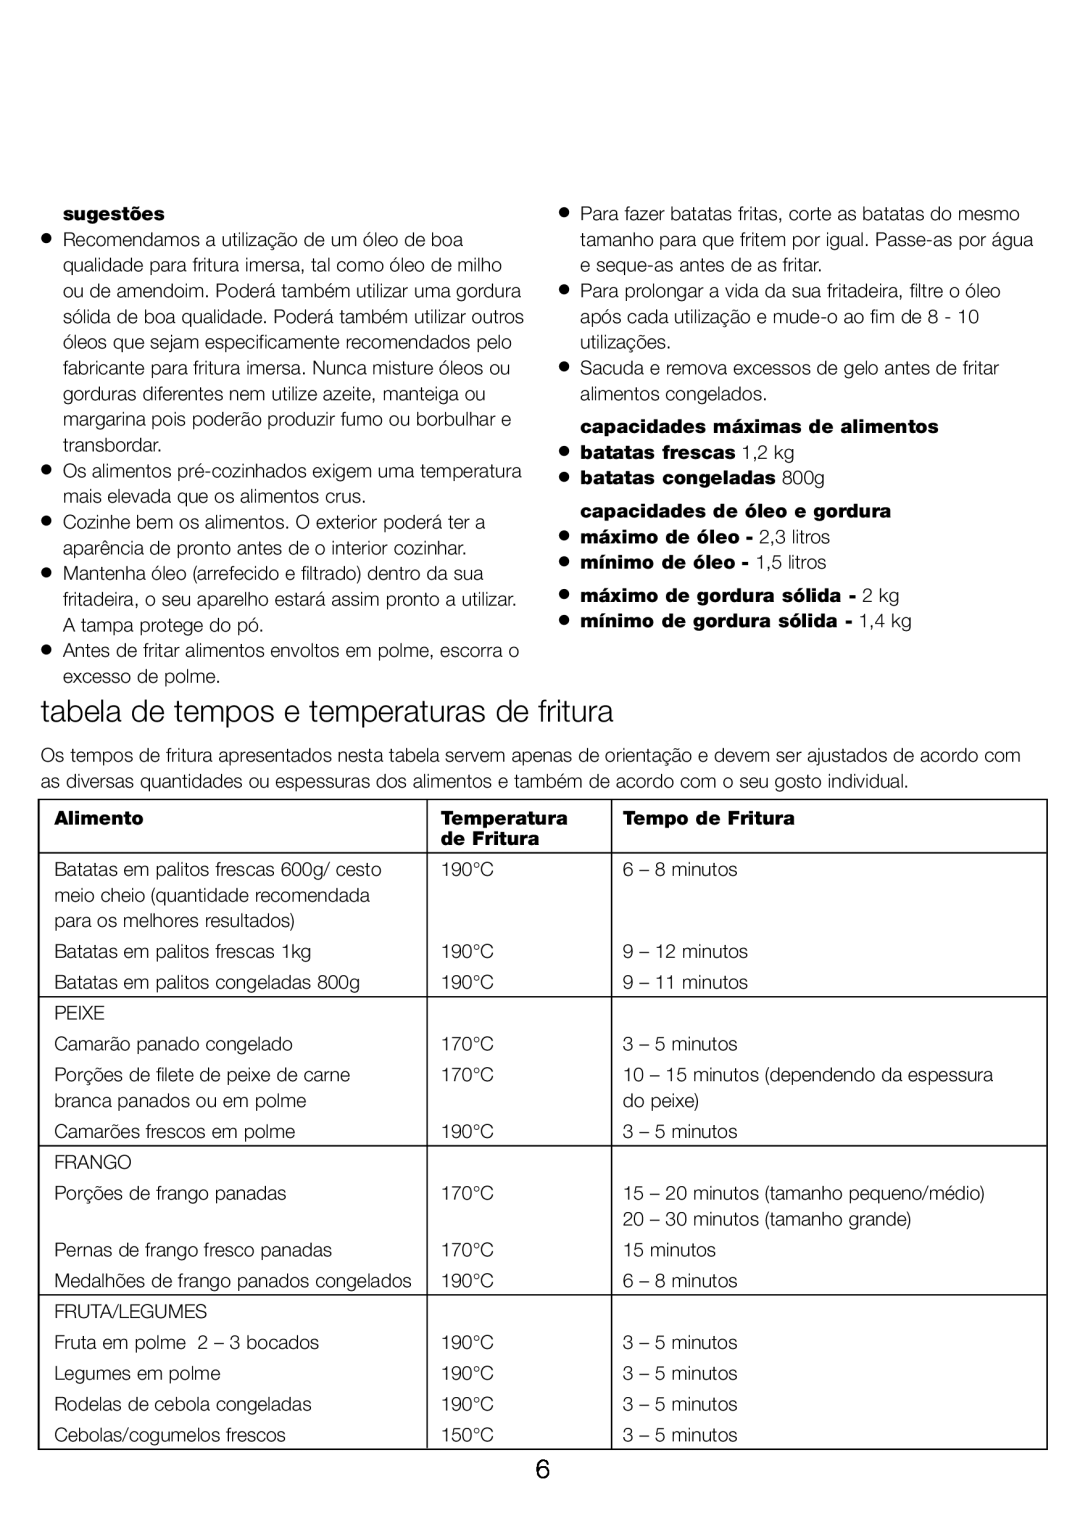 Kenwood DEEP FRYER manual tabela de tempos e temperaturas de fritura, sugestões, Alimento, Temperatura, Tempo de Fritura 